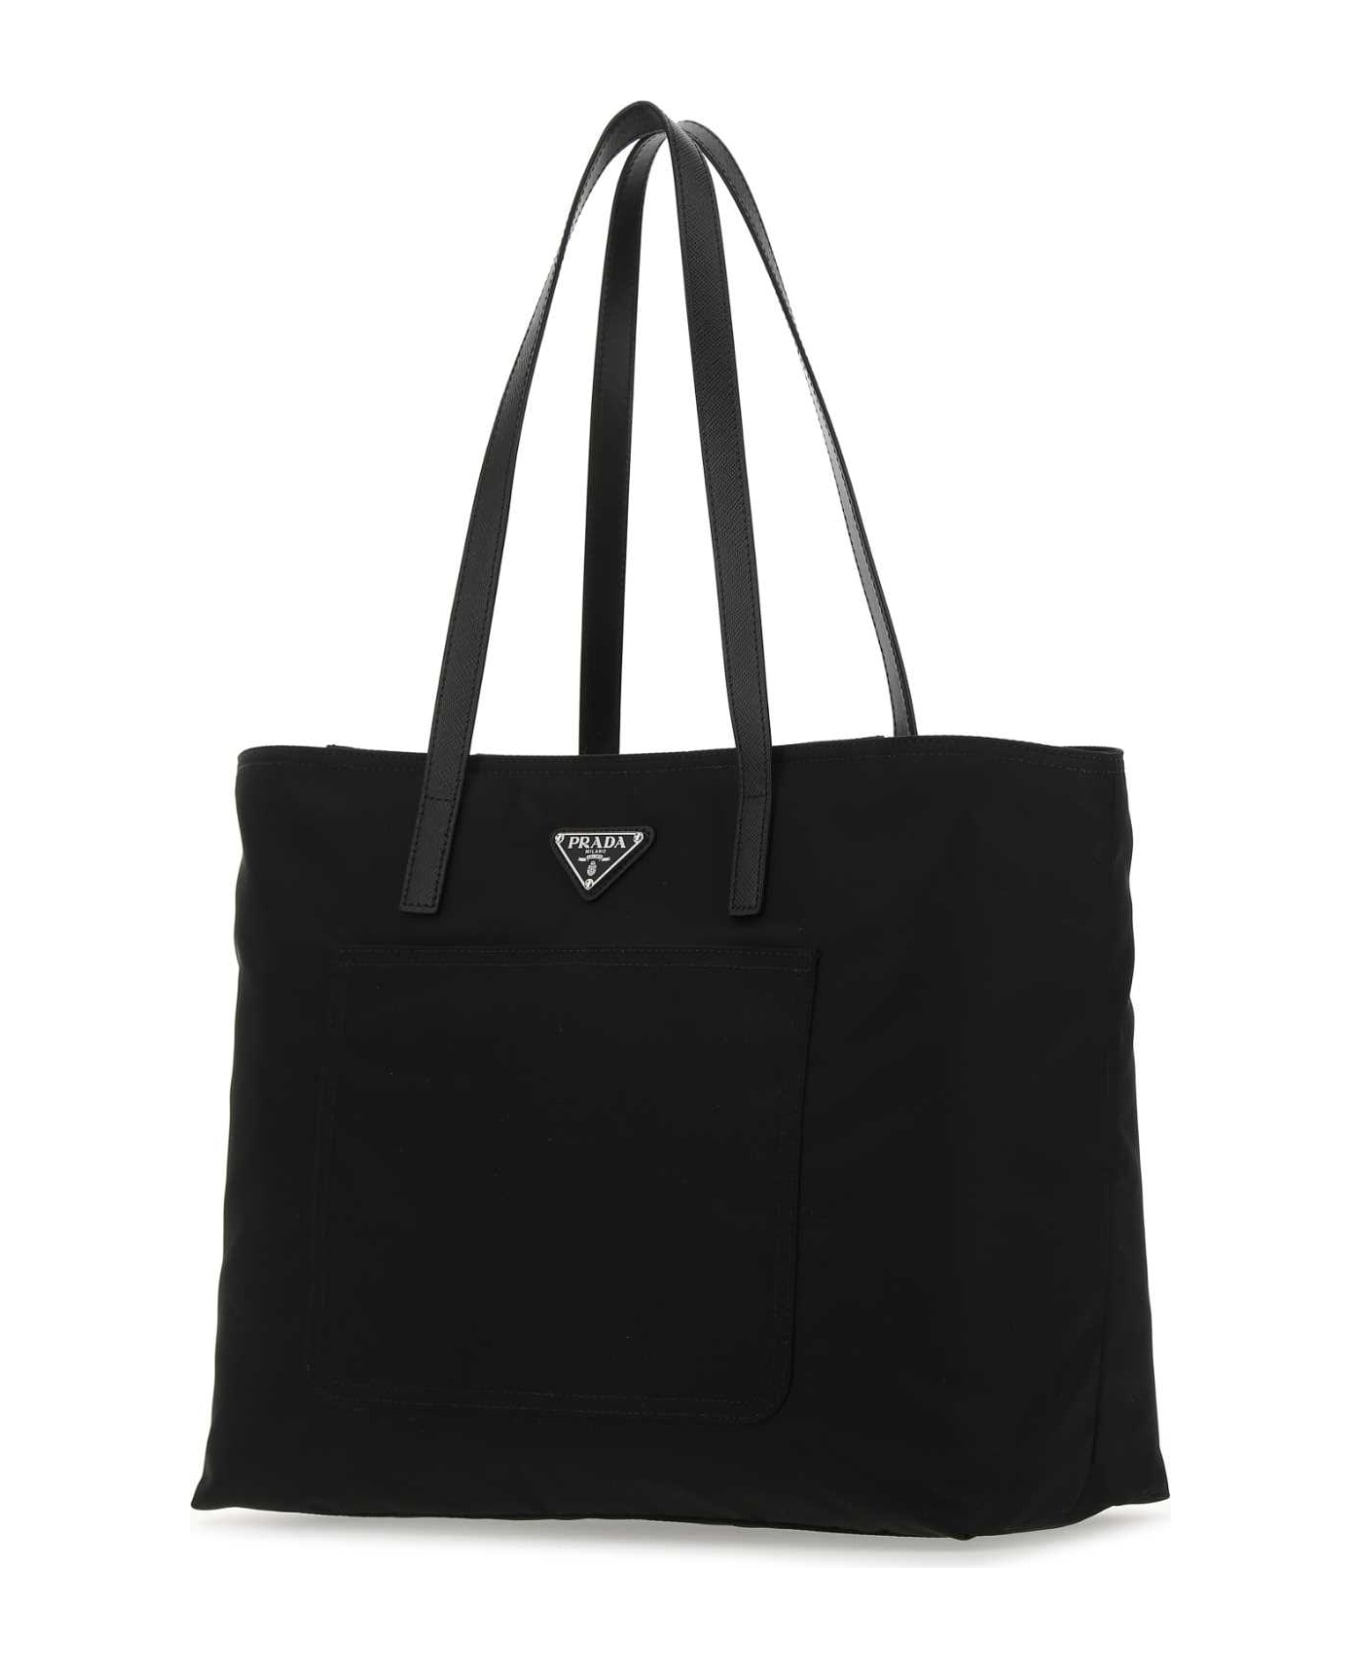 Prada Black Nylon Shopping Bag - F0002